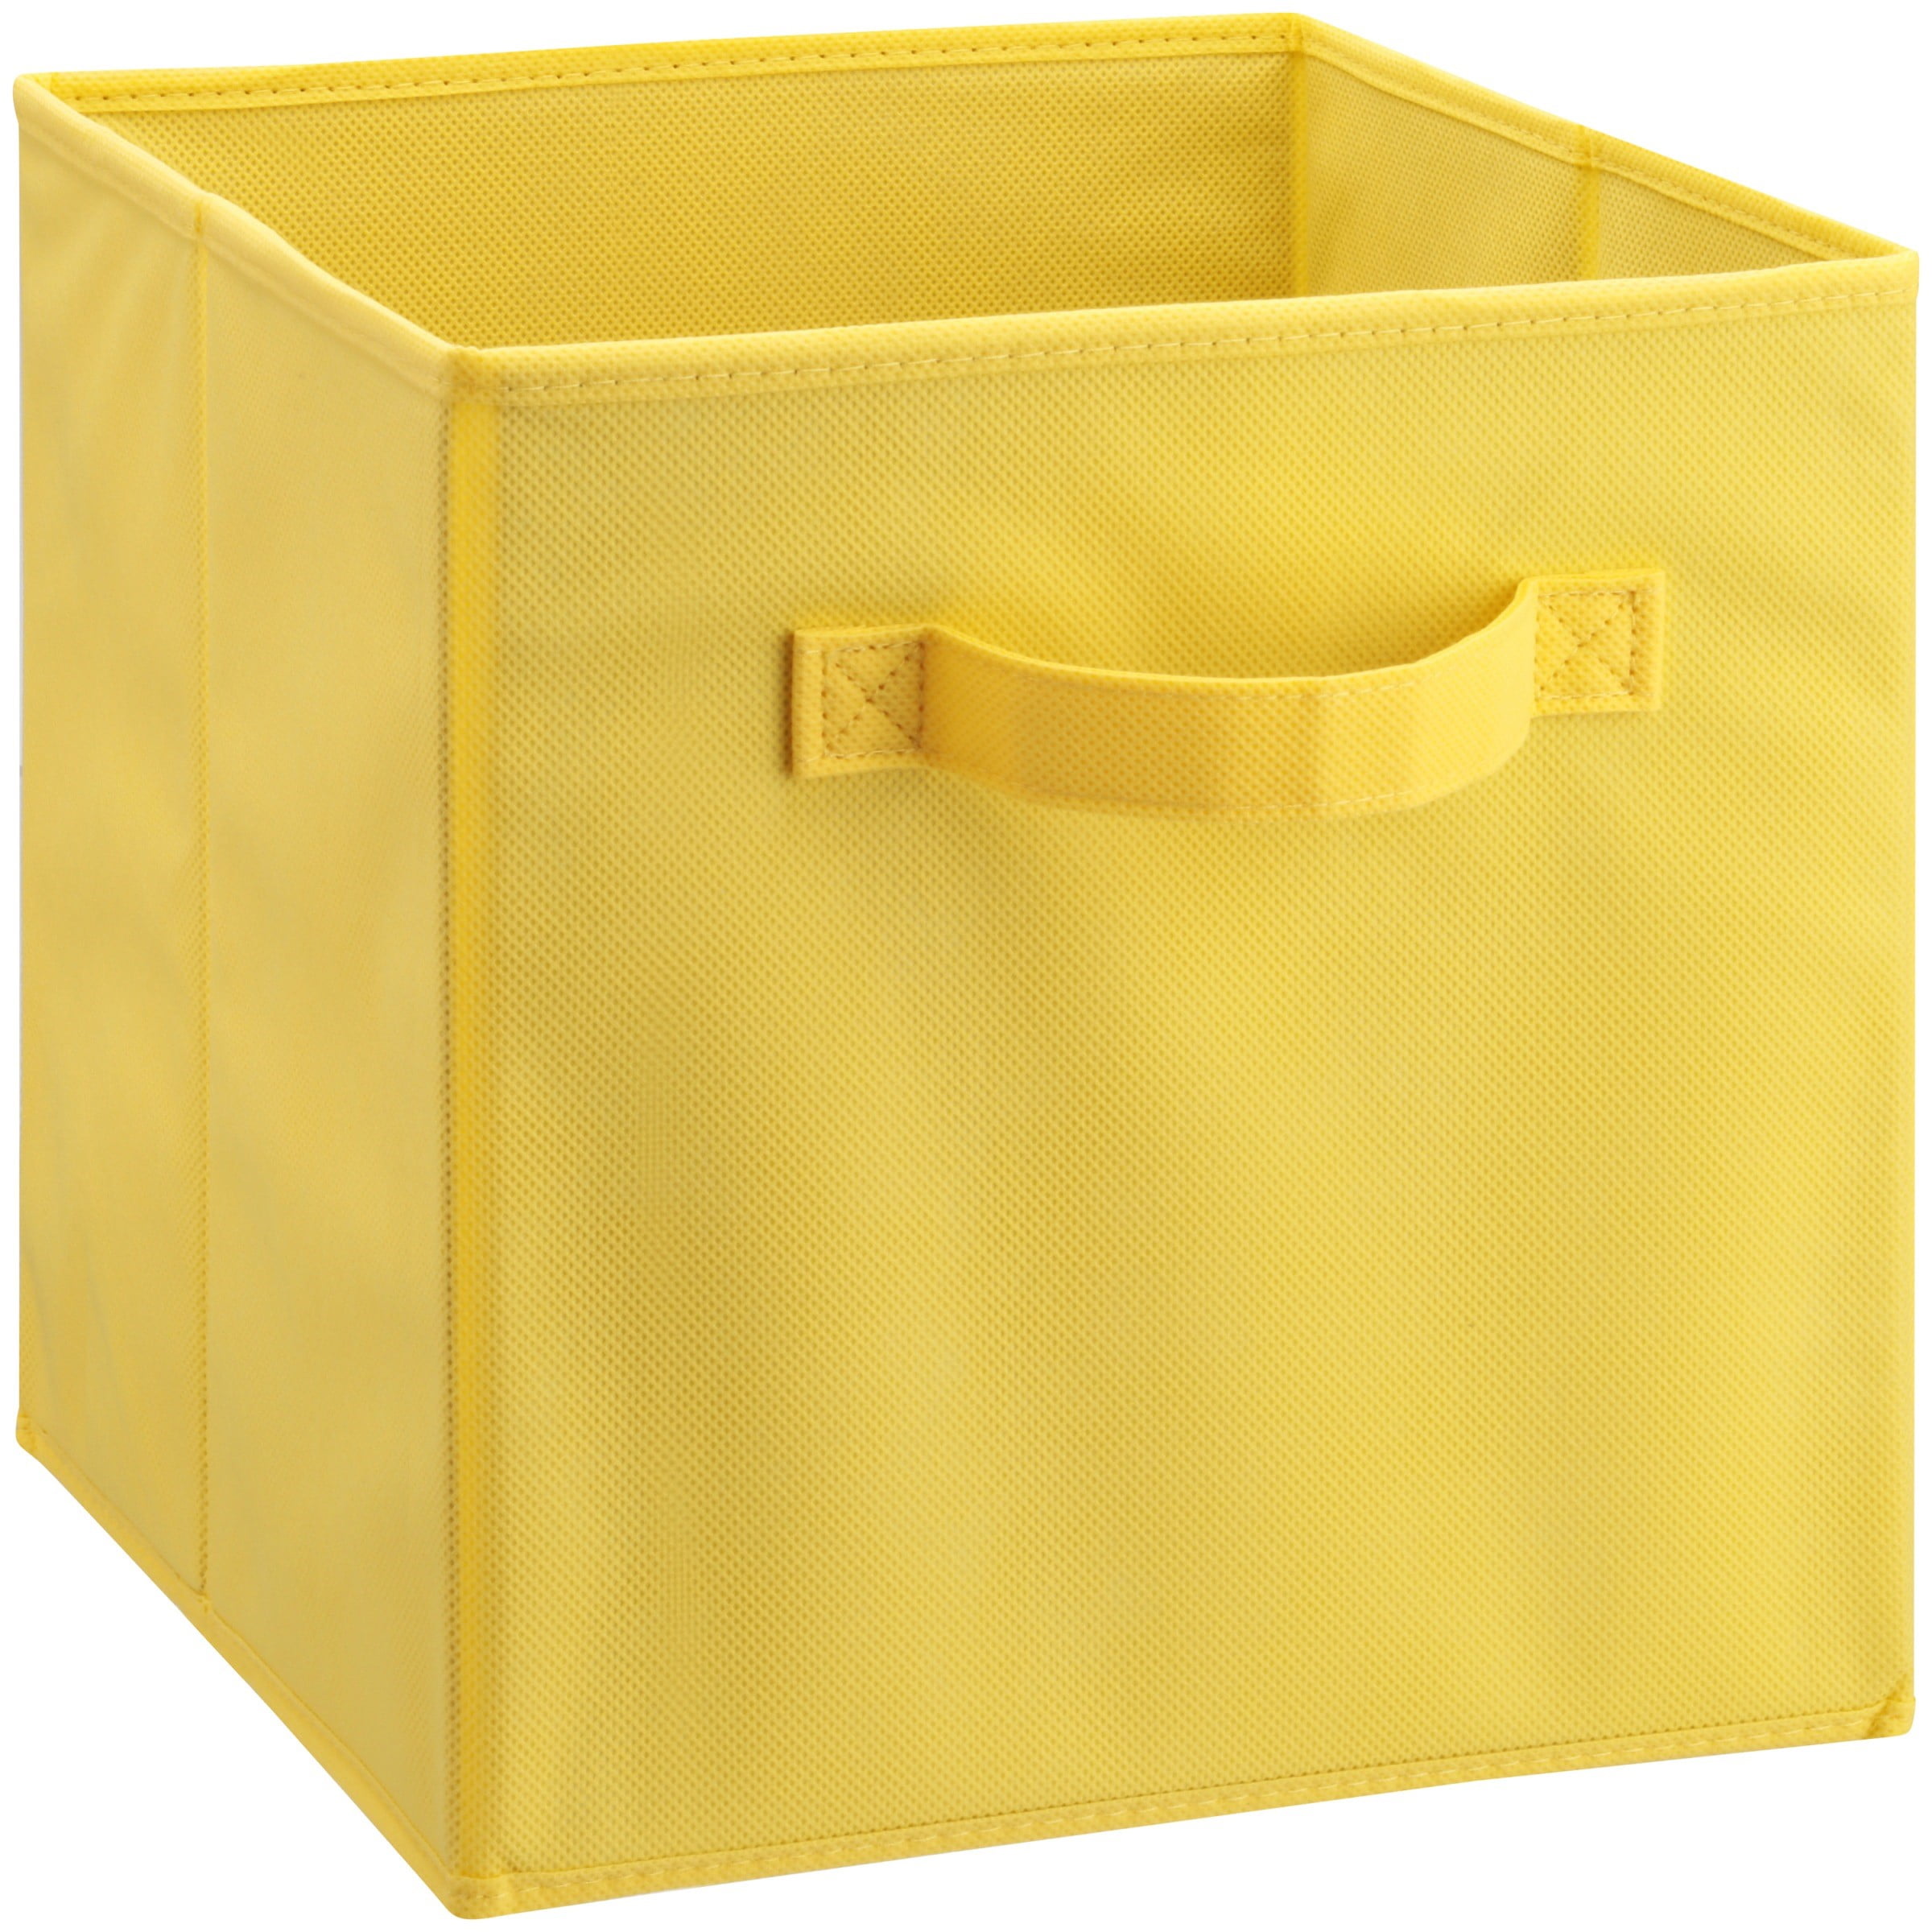 ClosetMaid 1833 Cubeicals Fabric Drawer Lemon 1-Pack